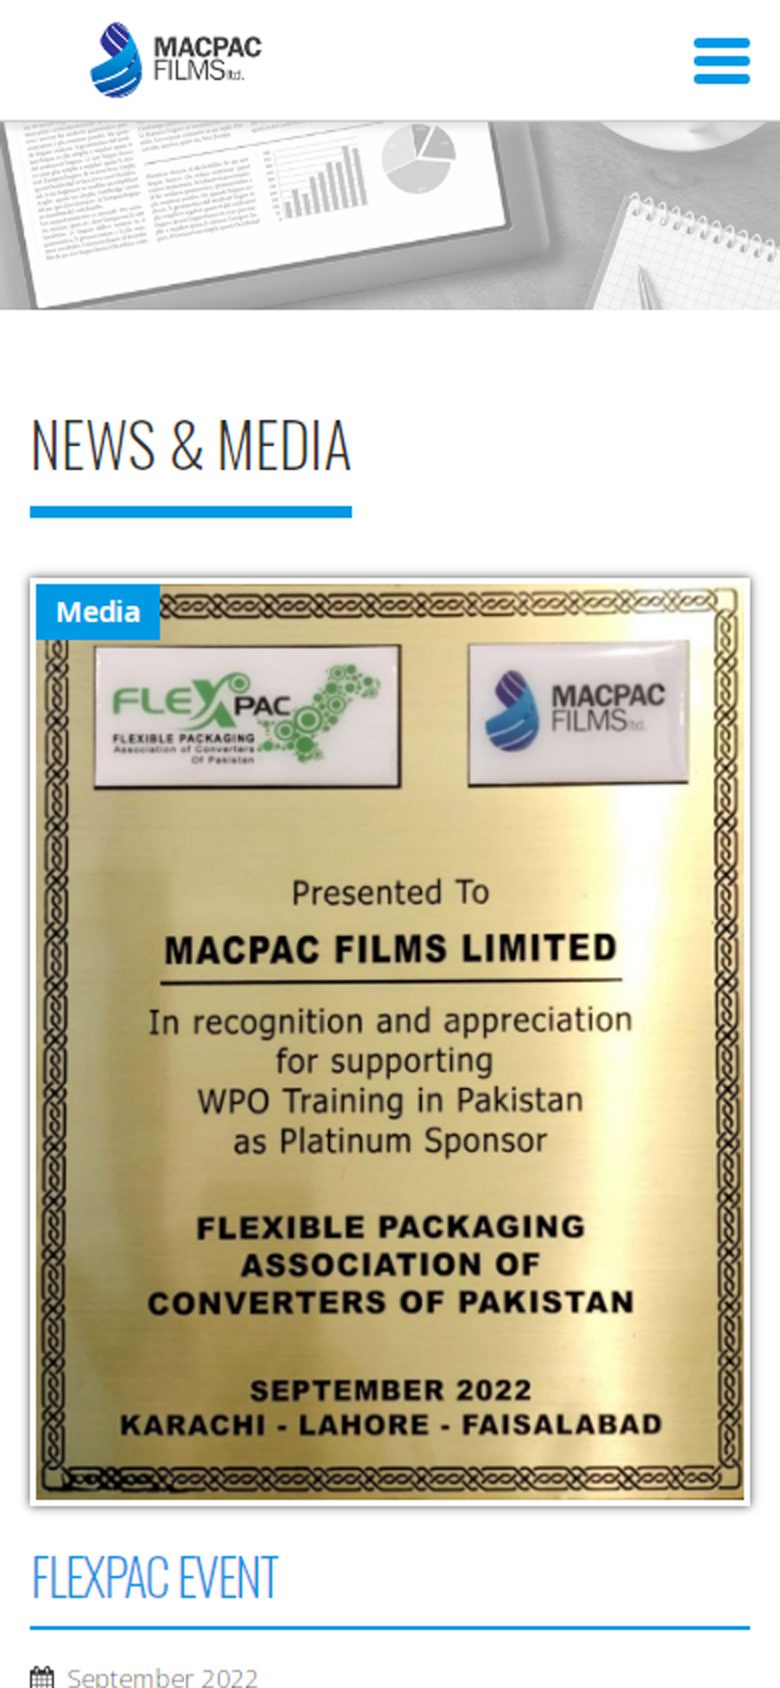 Macpac Films Branding